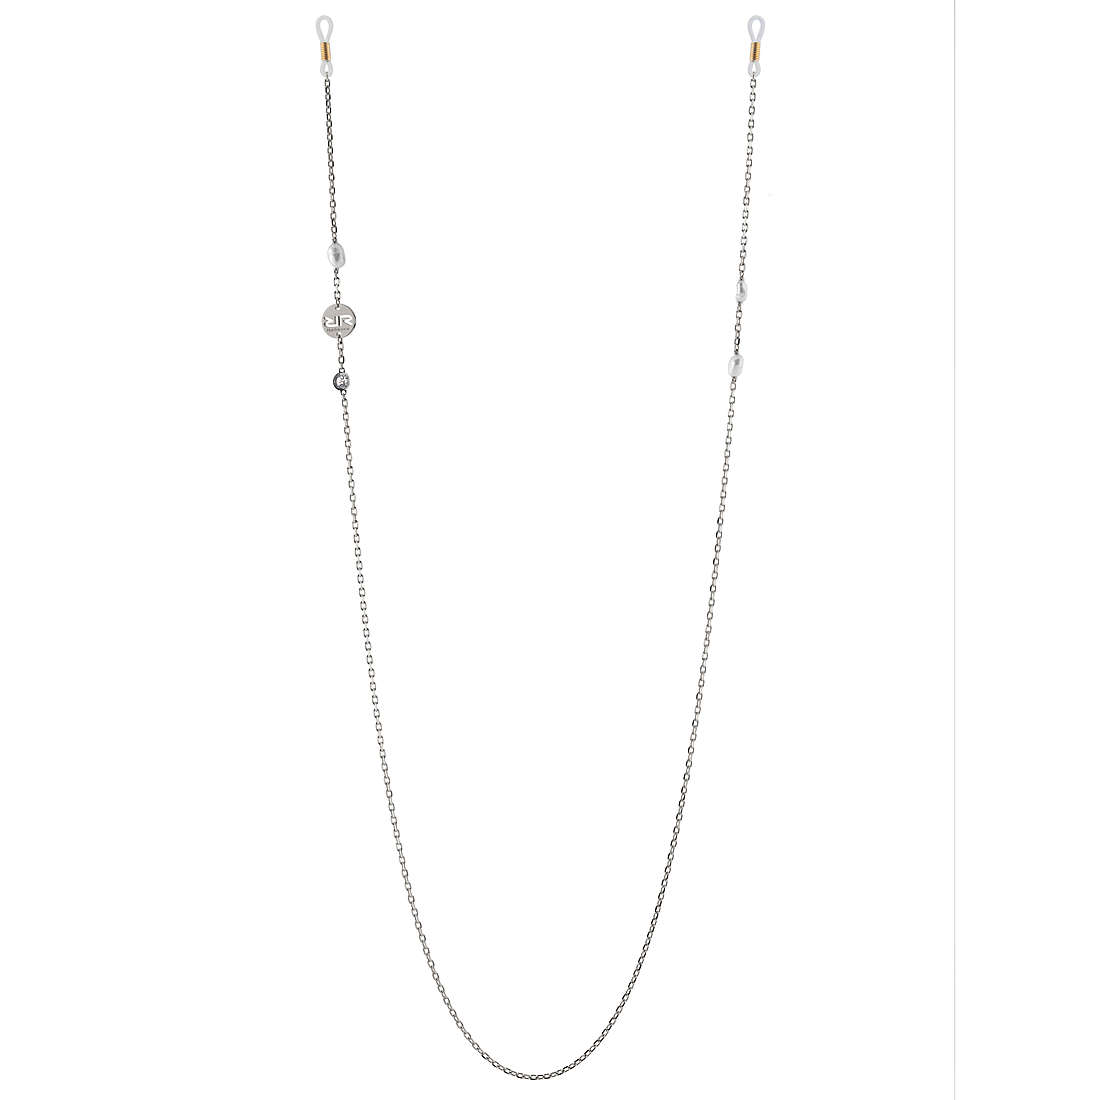 accessory Jewellery woman jewel Pearls AACPBB03